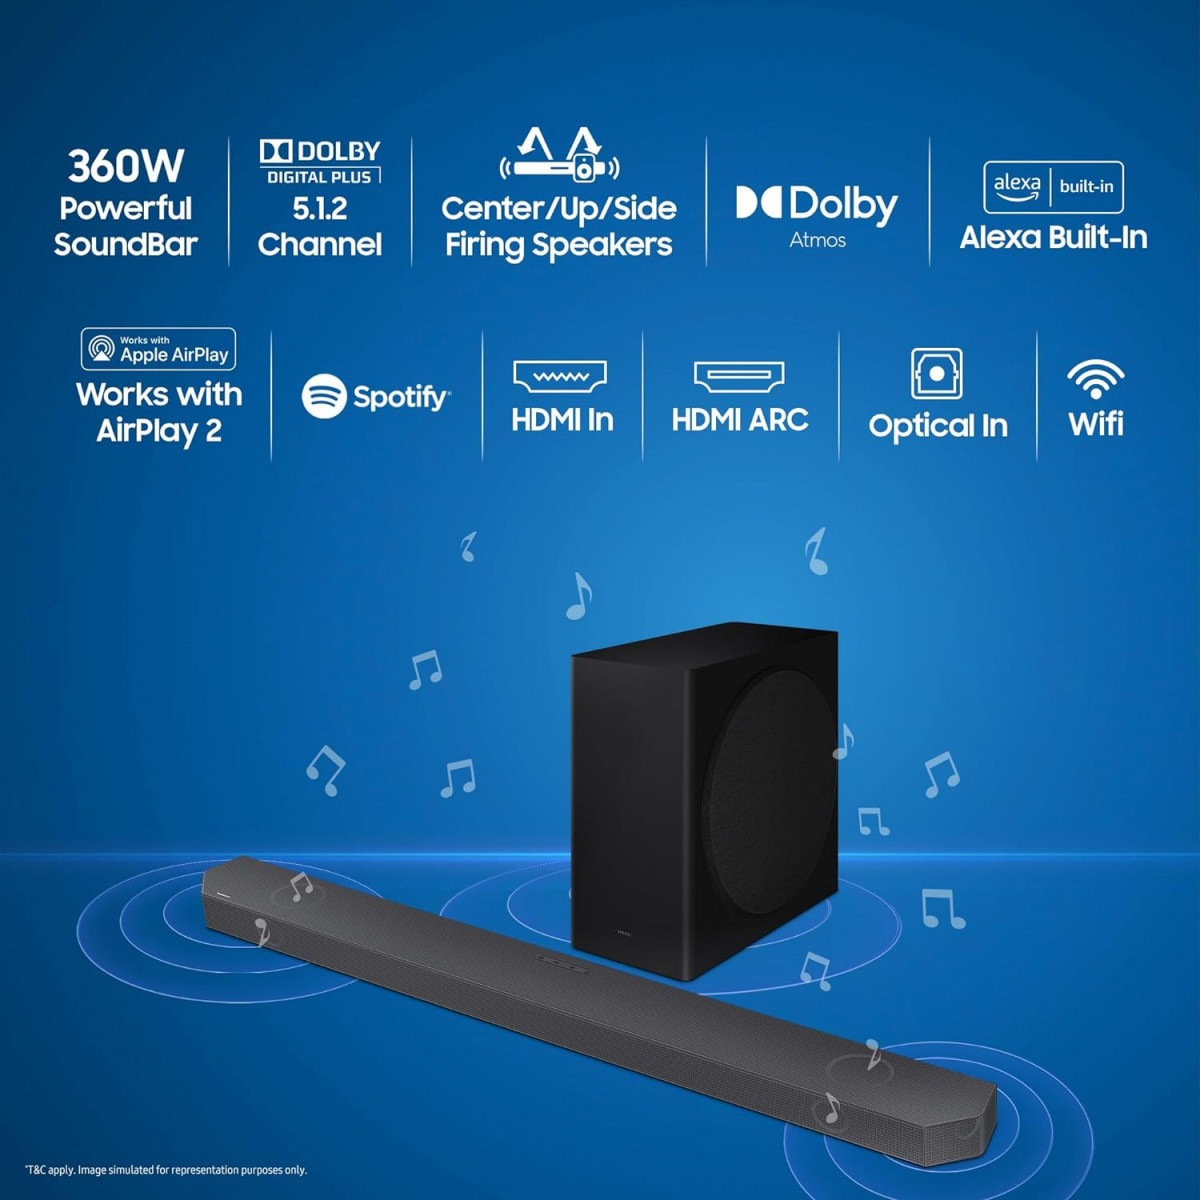 Samsung 360 W 512ch HW-Q800CXL Q-Symphony Soundbar with Wireless Subwoofer TopCentreSide Firing Speakers Wide Range Tweeter Dolby Atmos Built-in Alexa AirPlay2 Wi-Fi Black